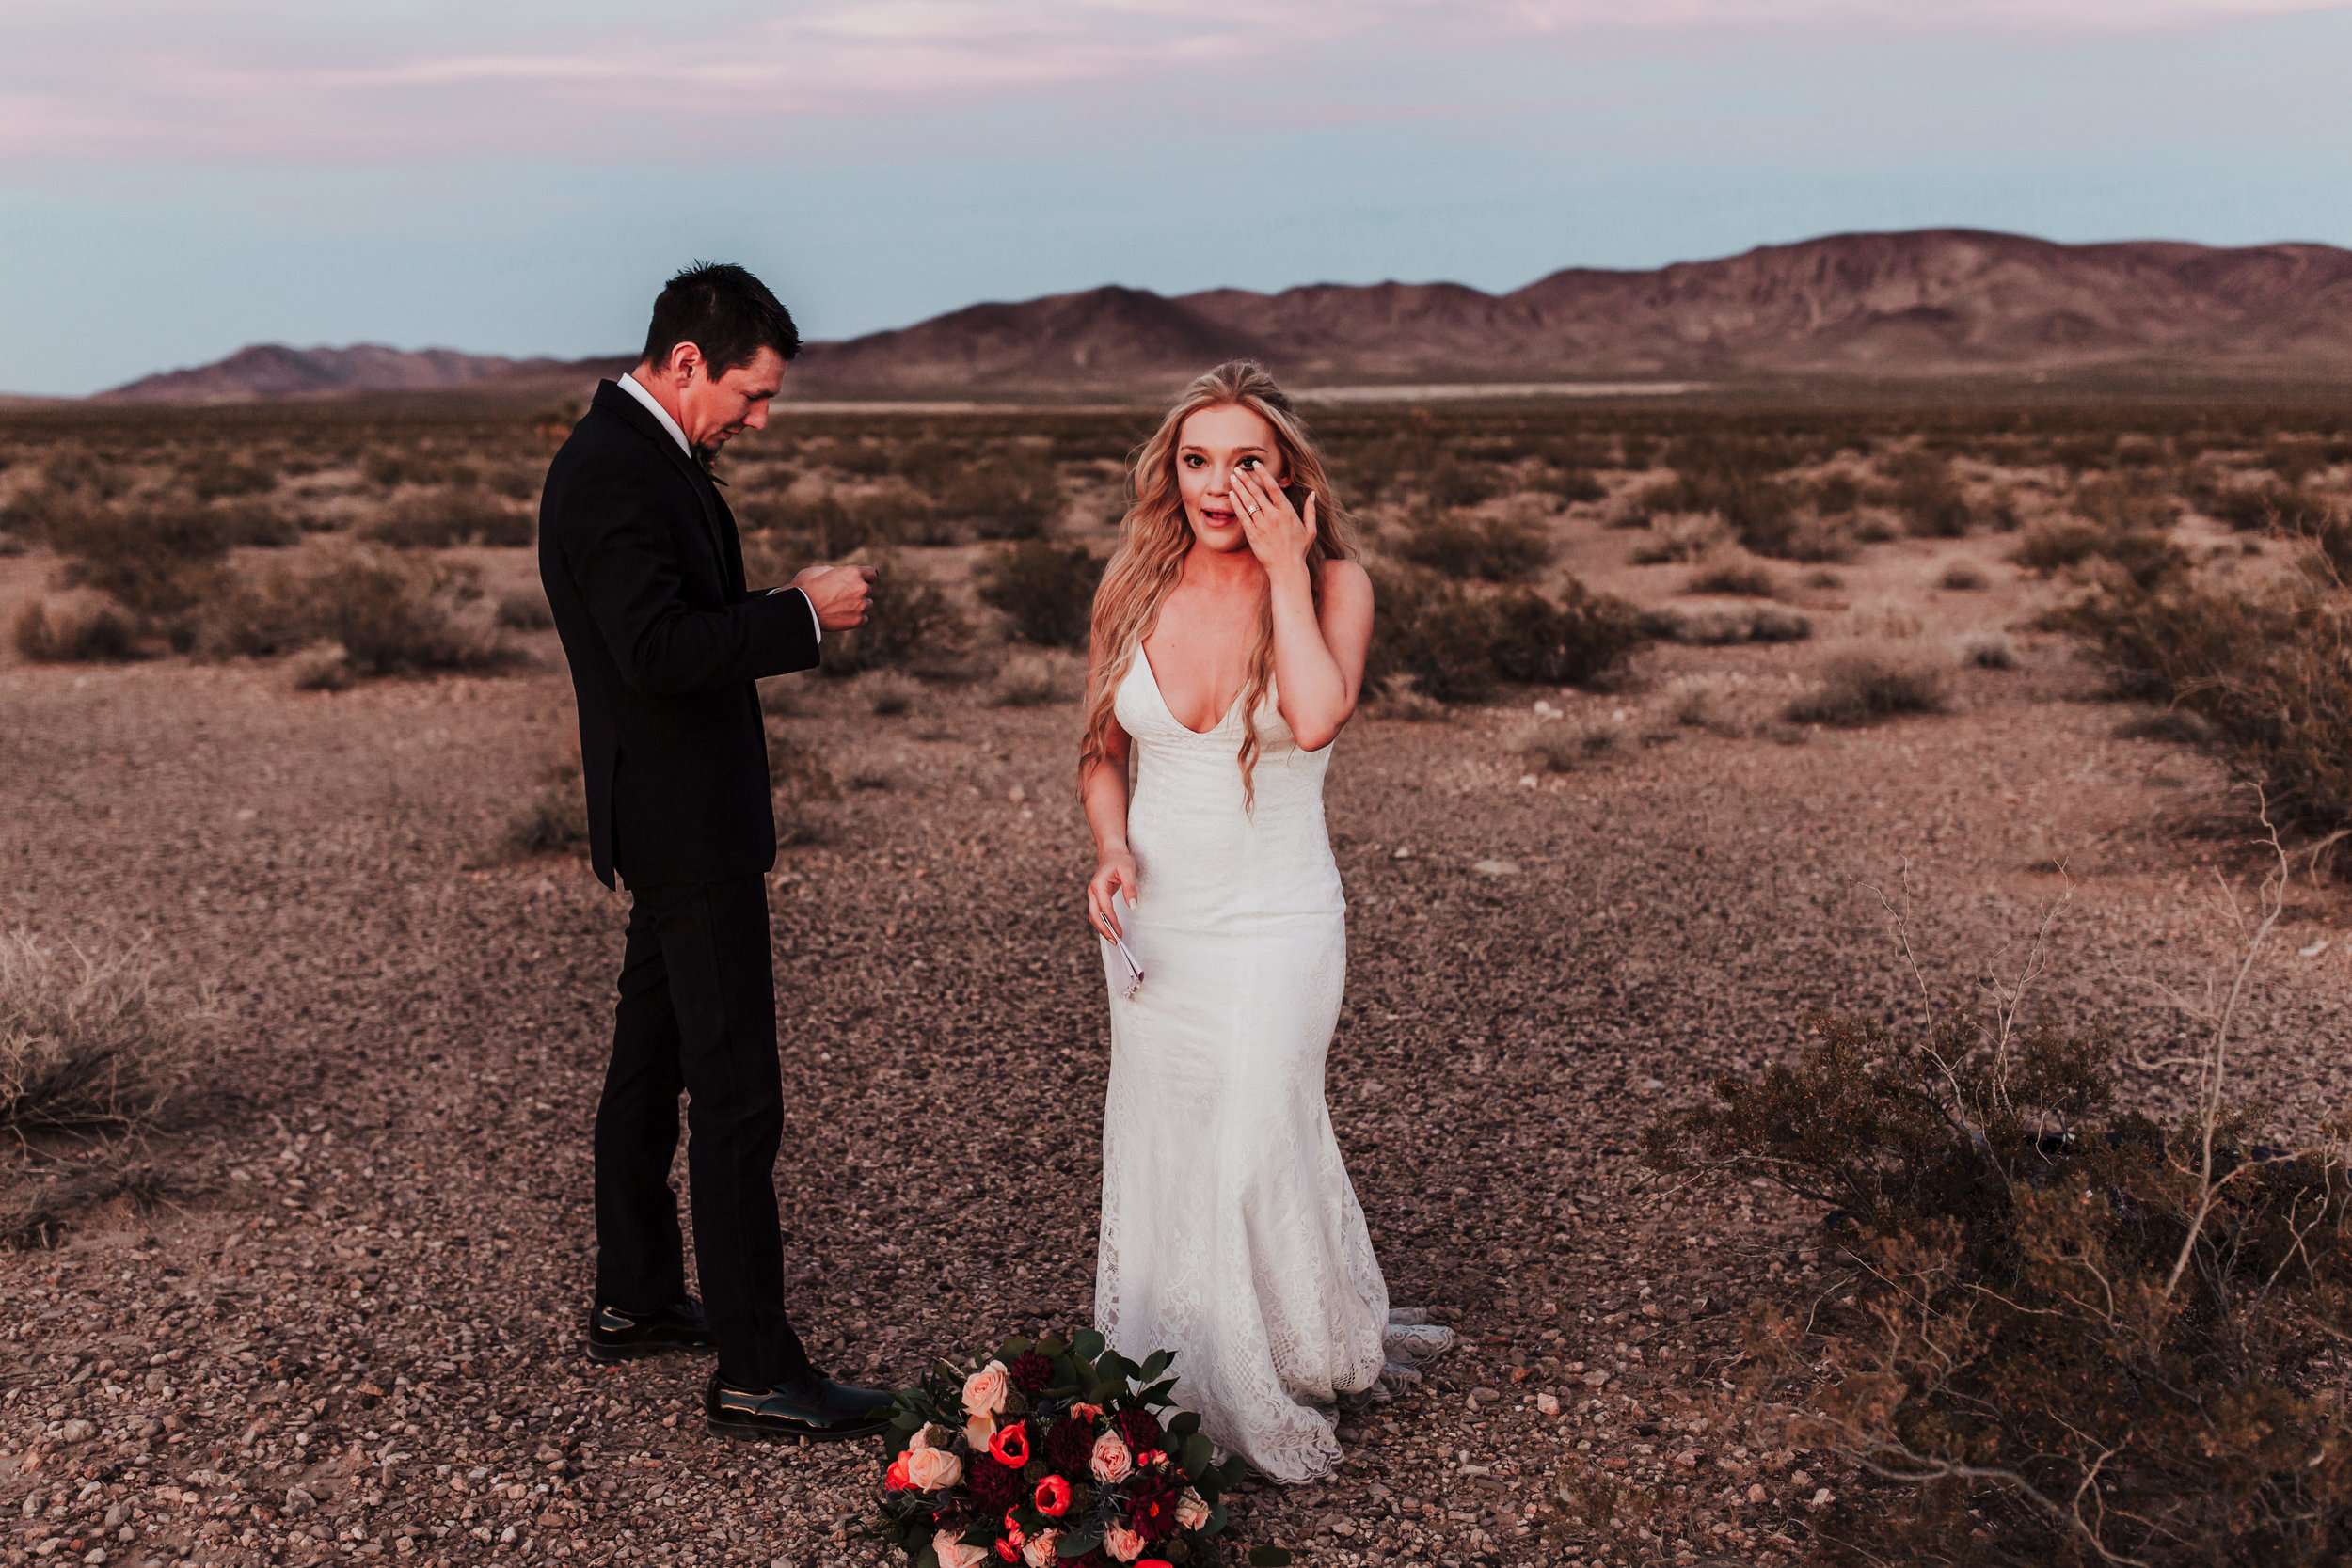 Rustic Bloom Photography | Las Vegas Desert Elopement | Emotional Vows